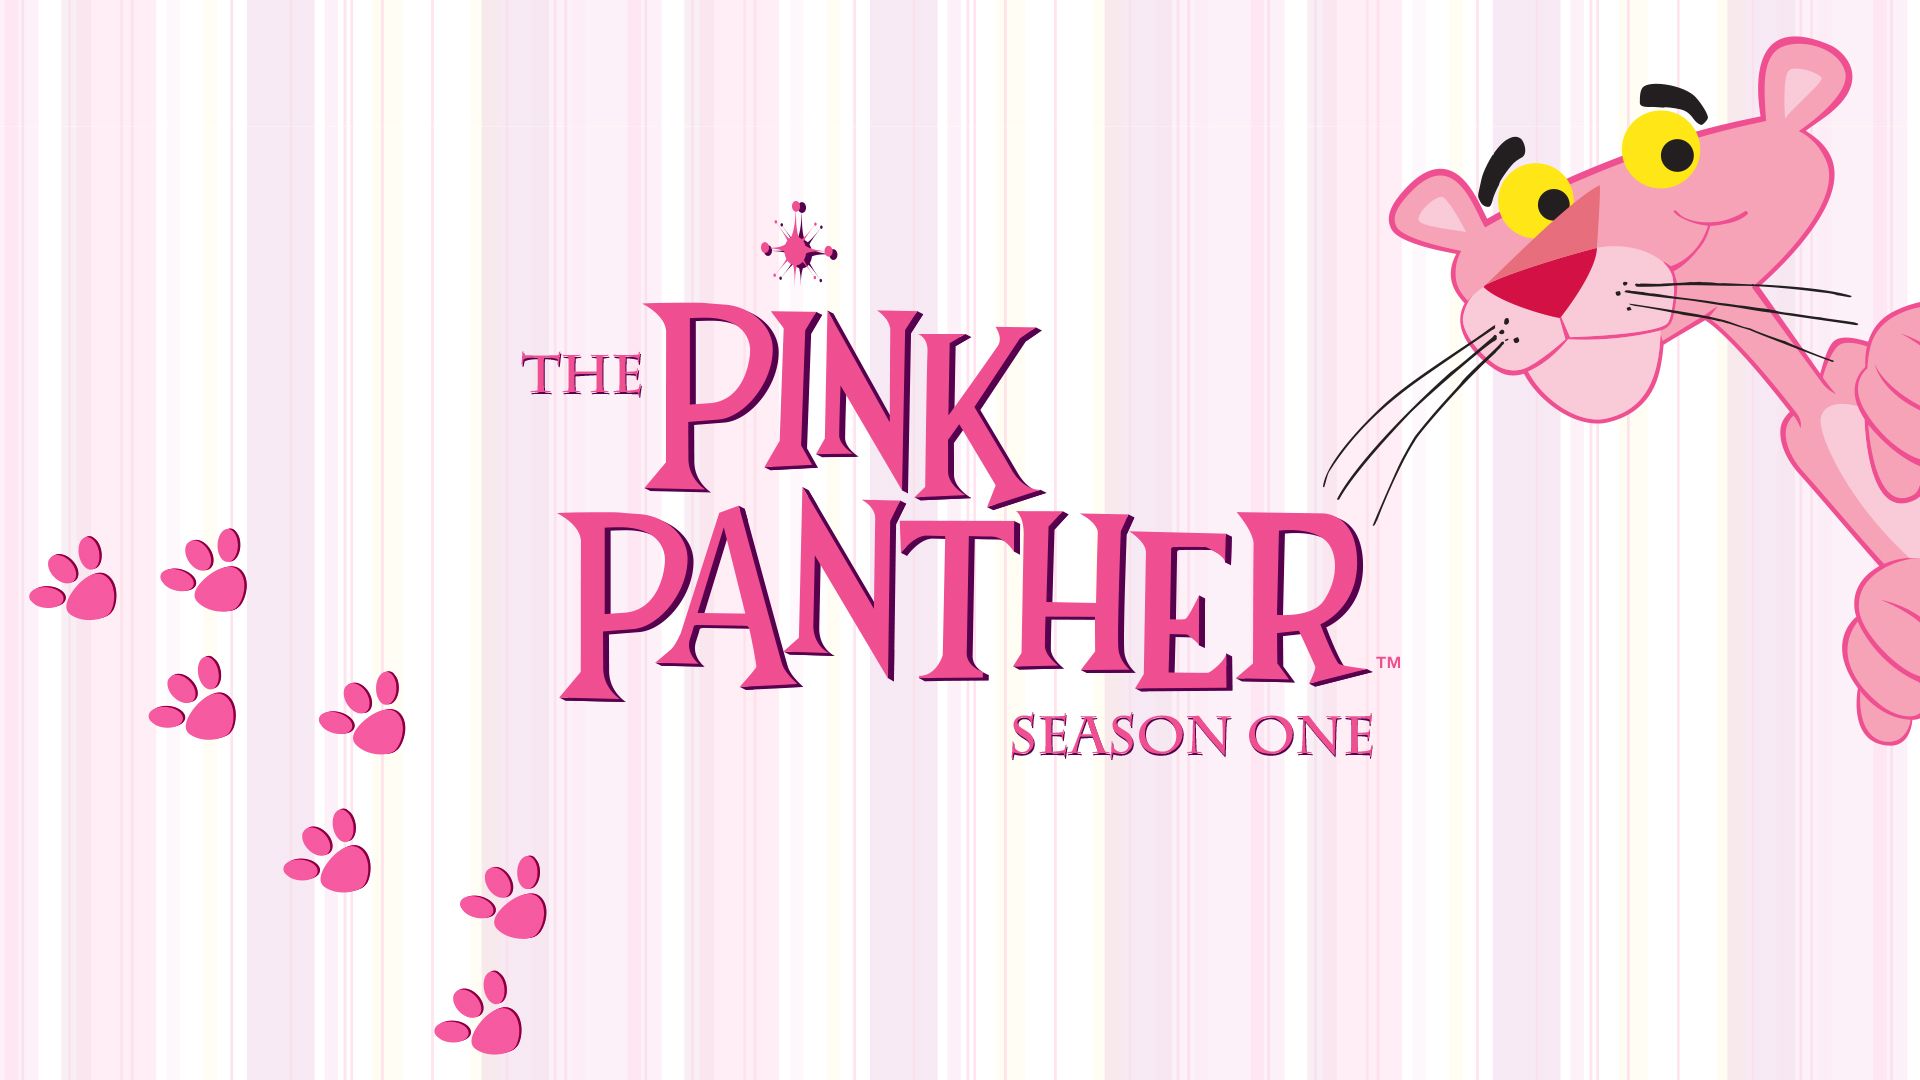 The Pink Panther Season One. - Pink Panther